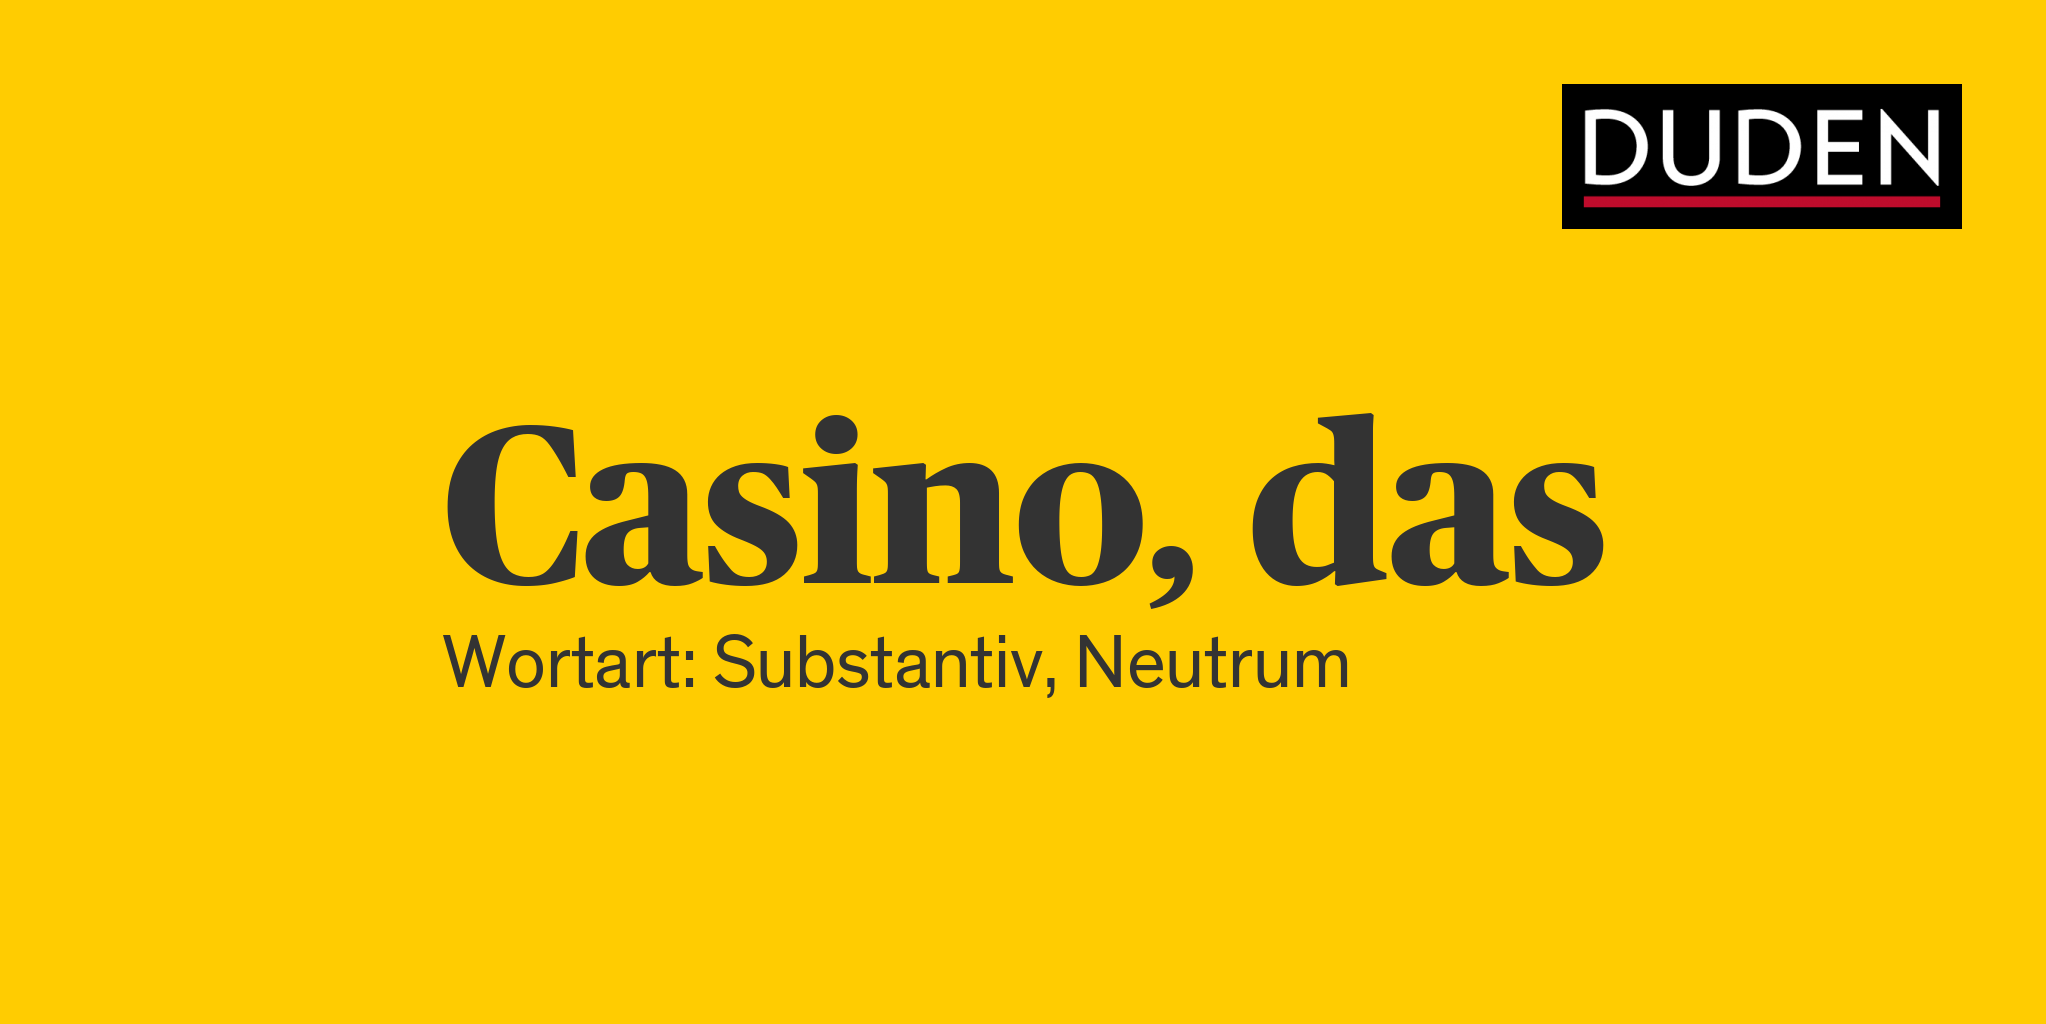 duden casino